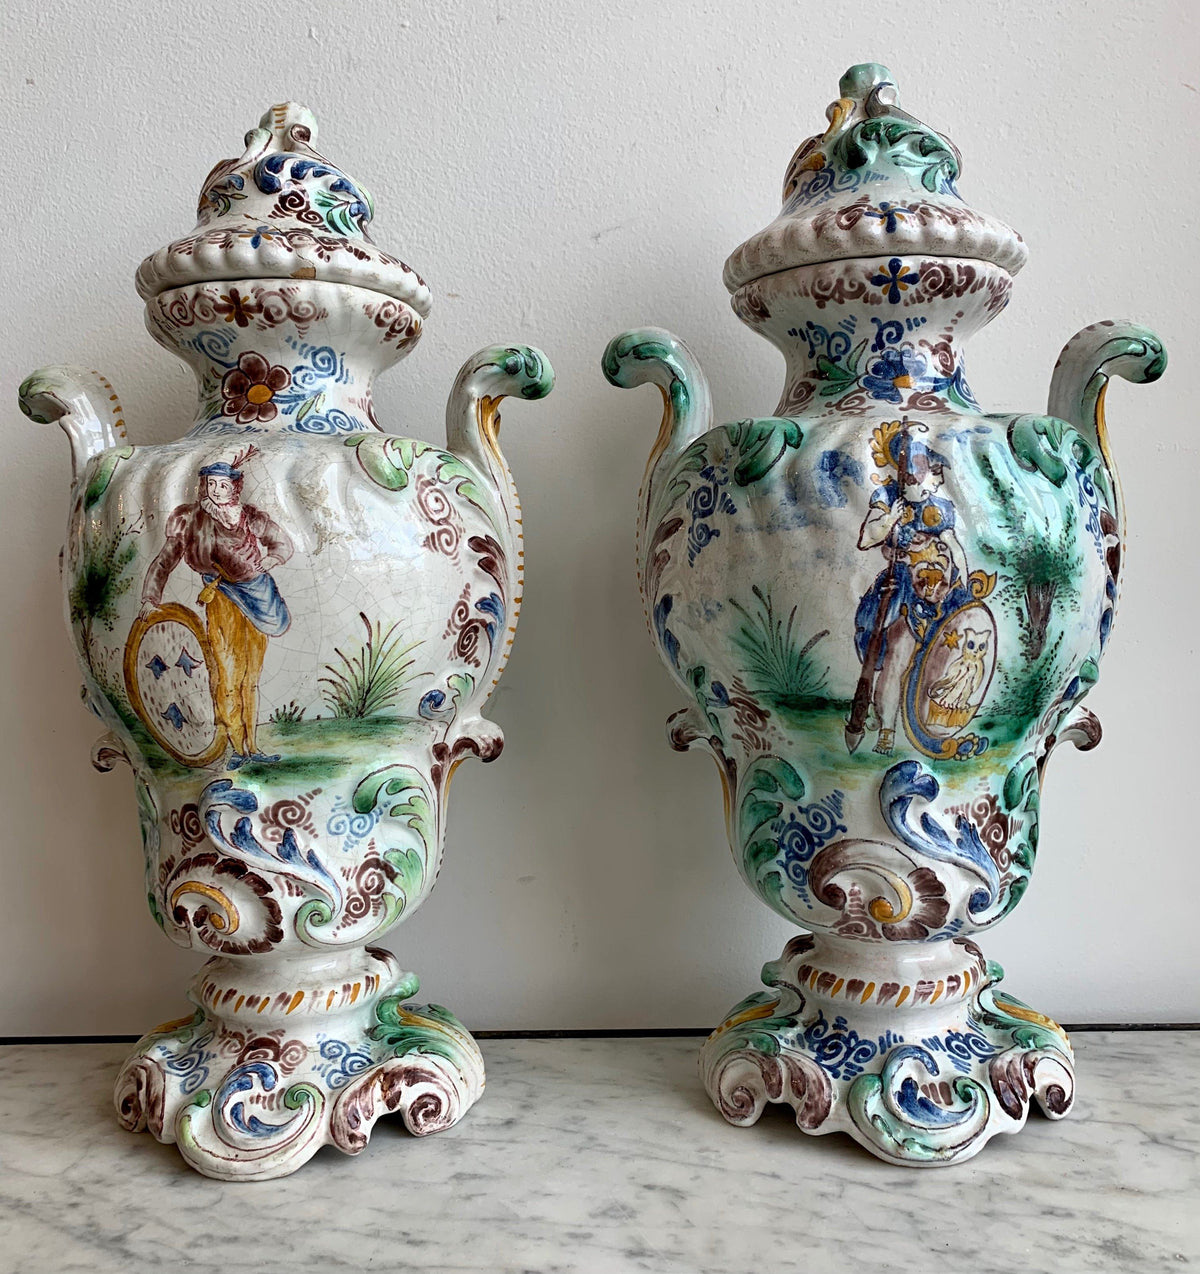 Vase - PAIR OF 18TH CENTURY ITALIAN FAIENCE VASES WITH LIDS